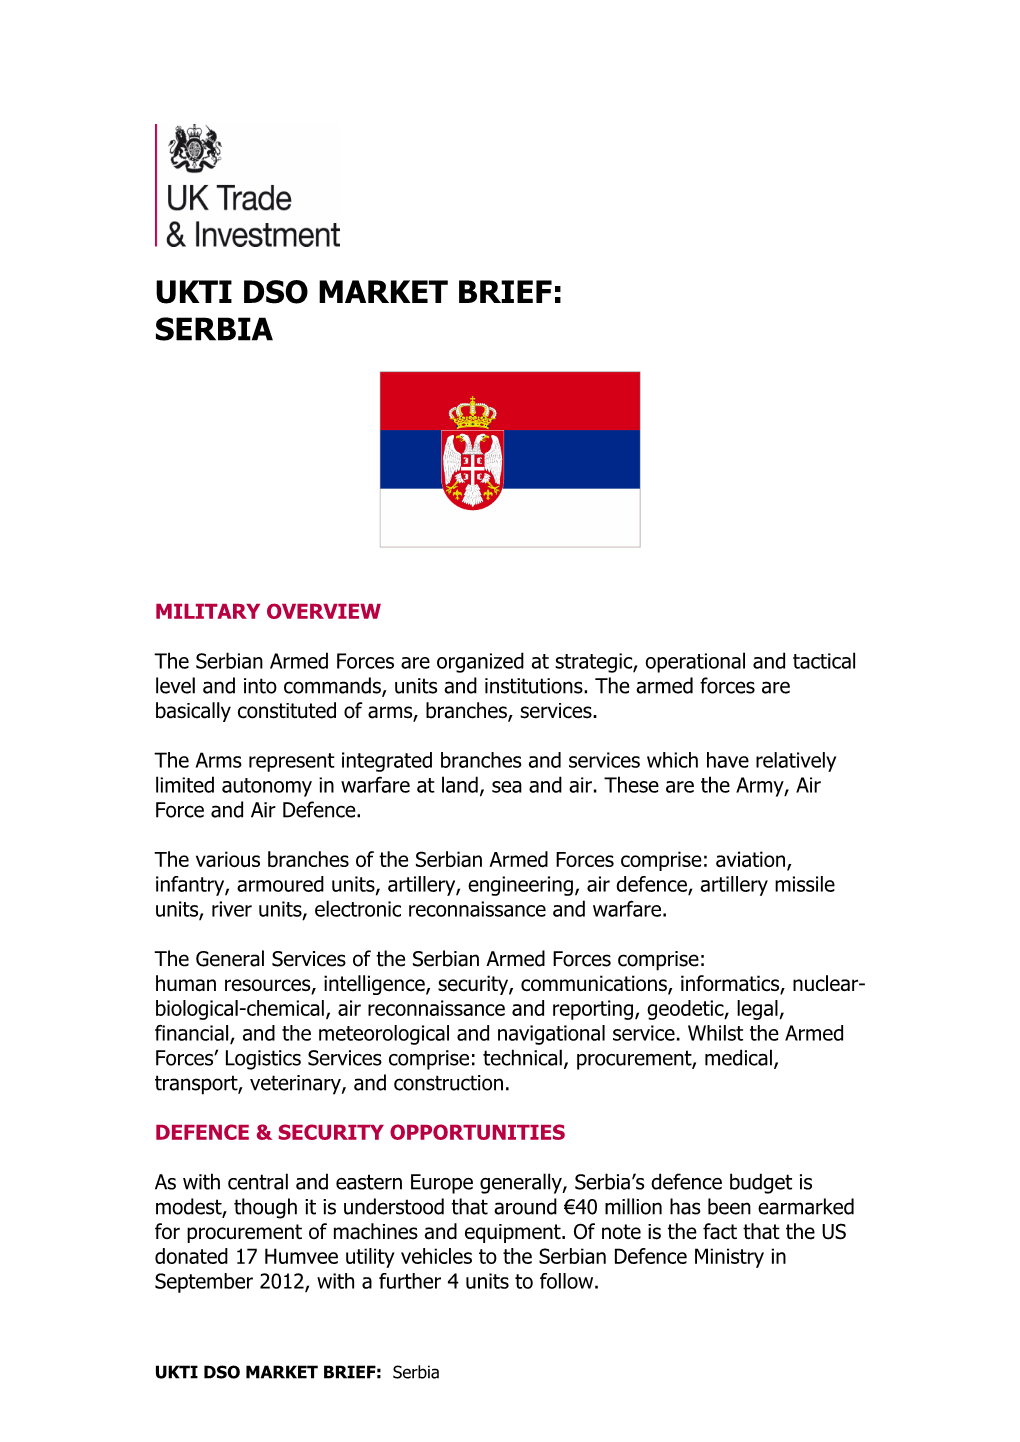 UKTI DSO Market Brief Serbia